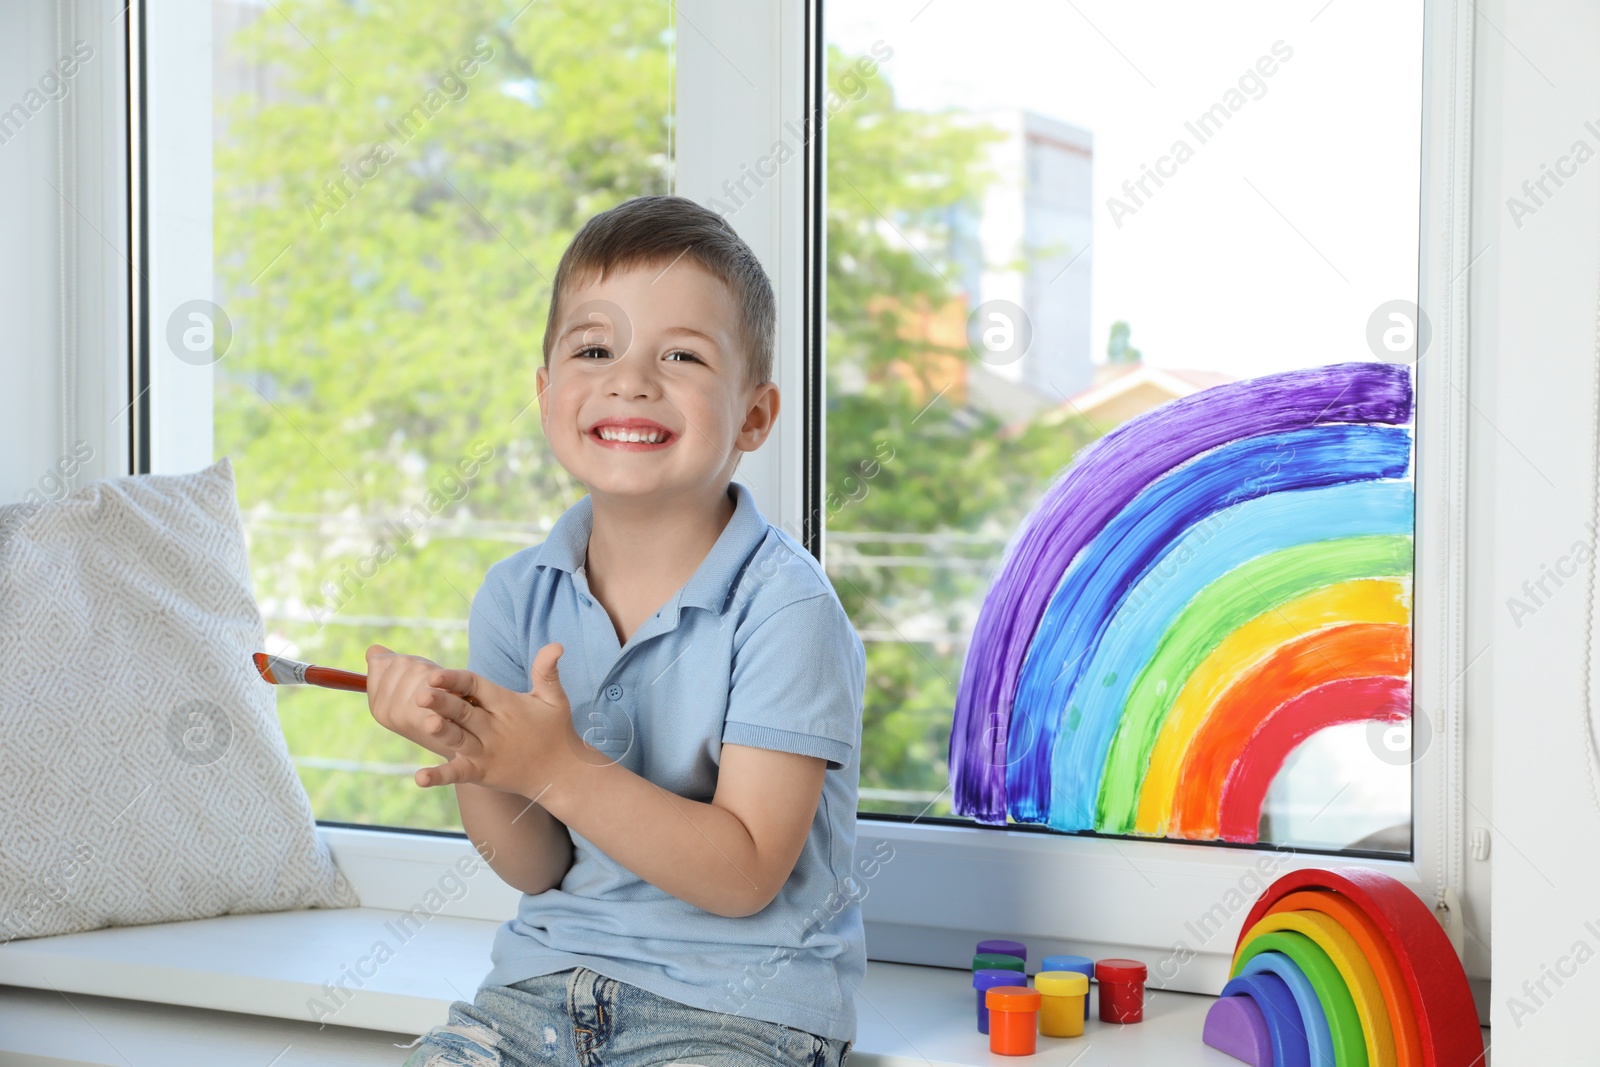 Photo of Little boy with brush near rainbow painting on window indoors